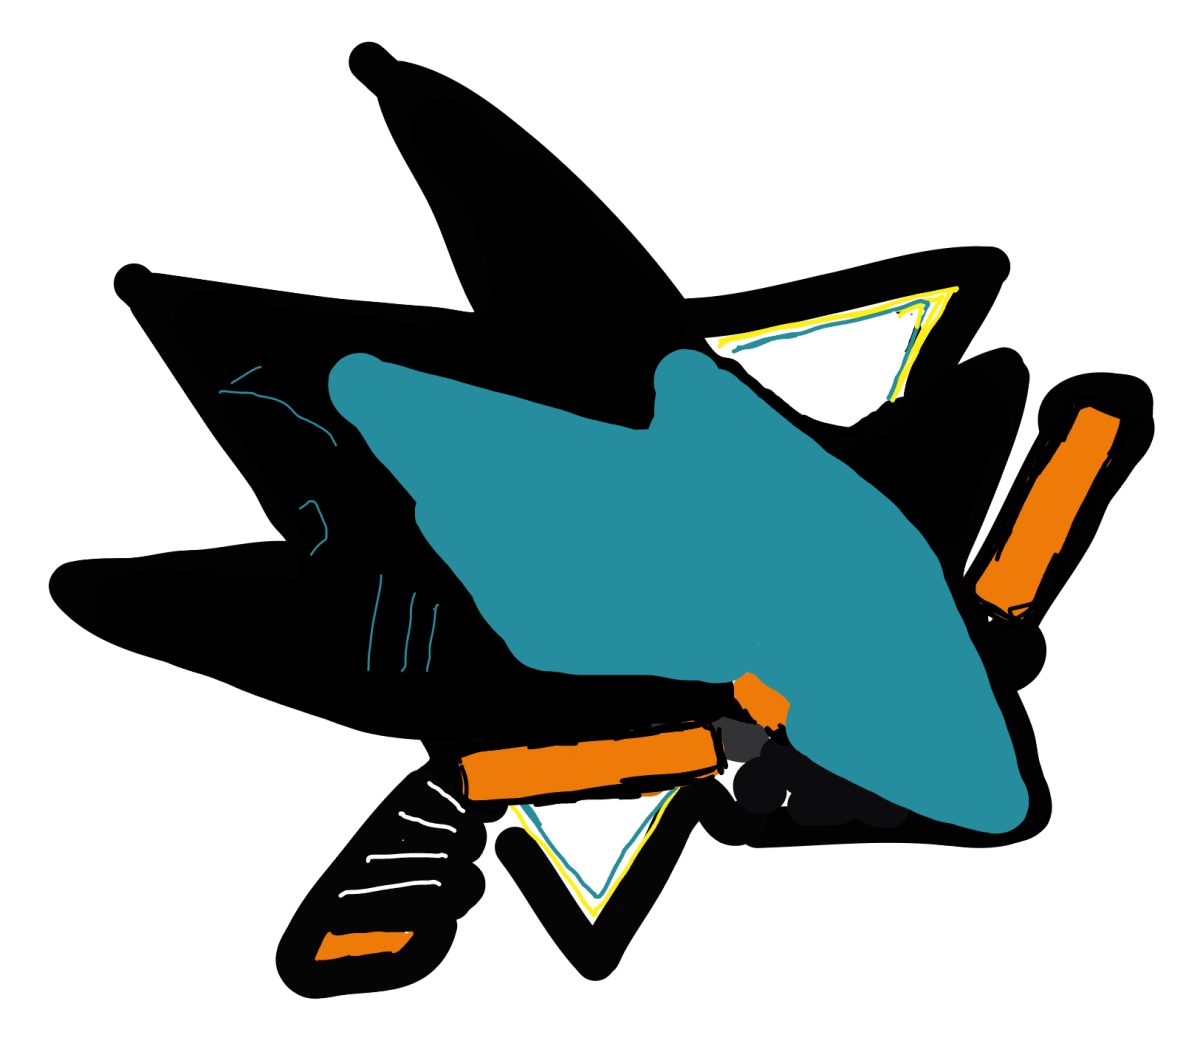 The+San+Jose+Sharks+team+logo.